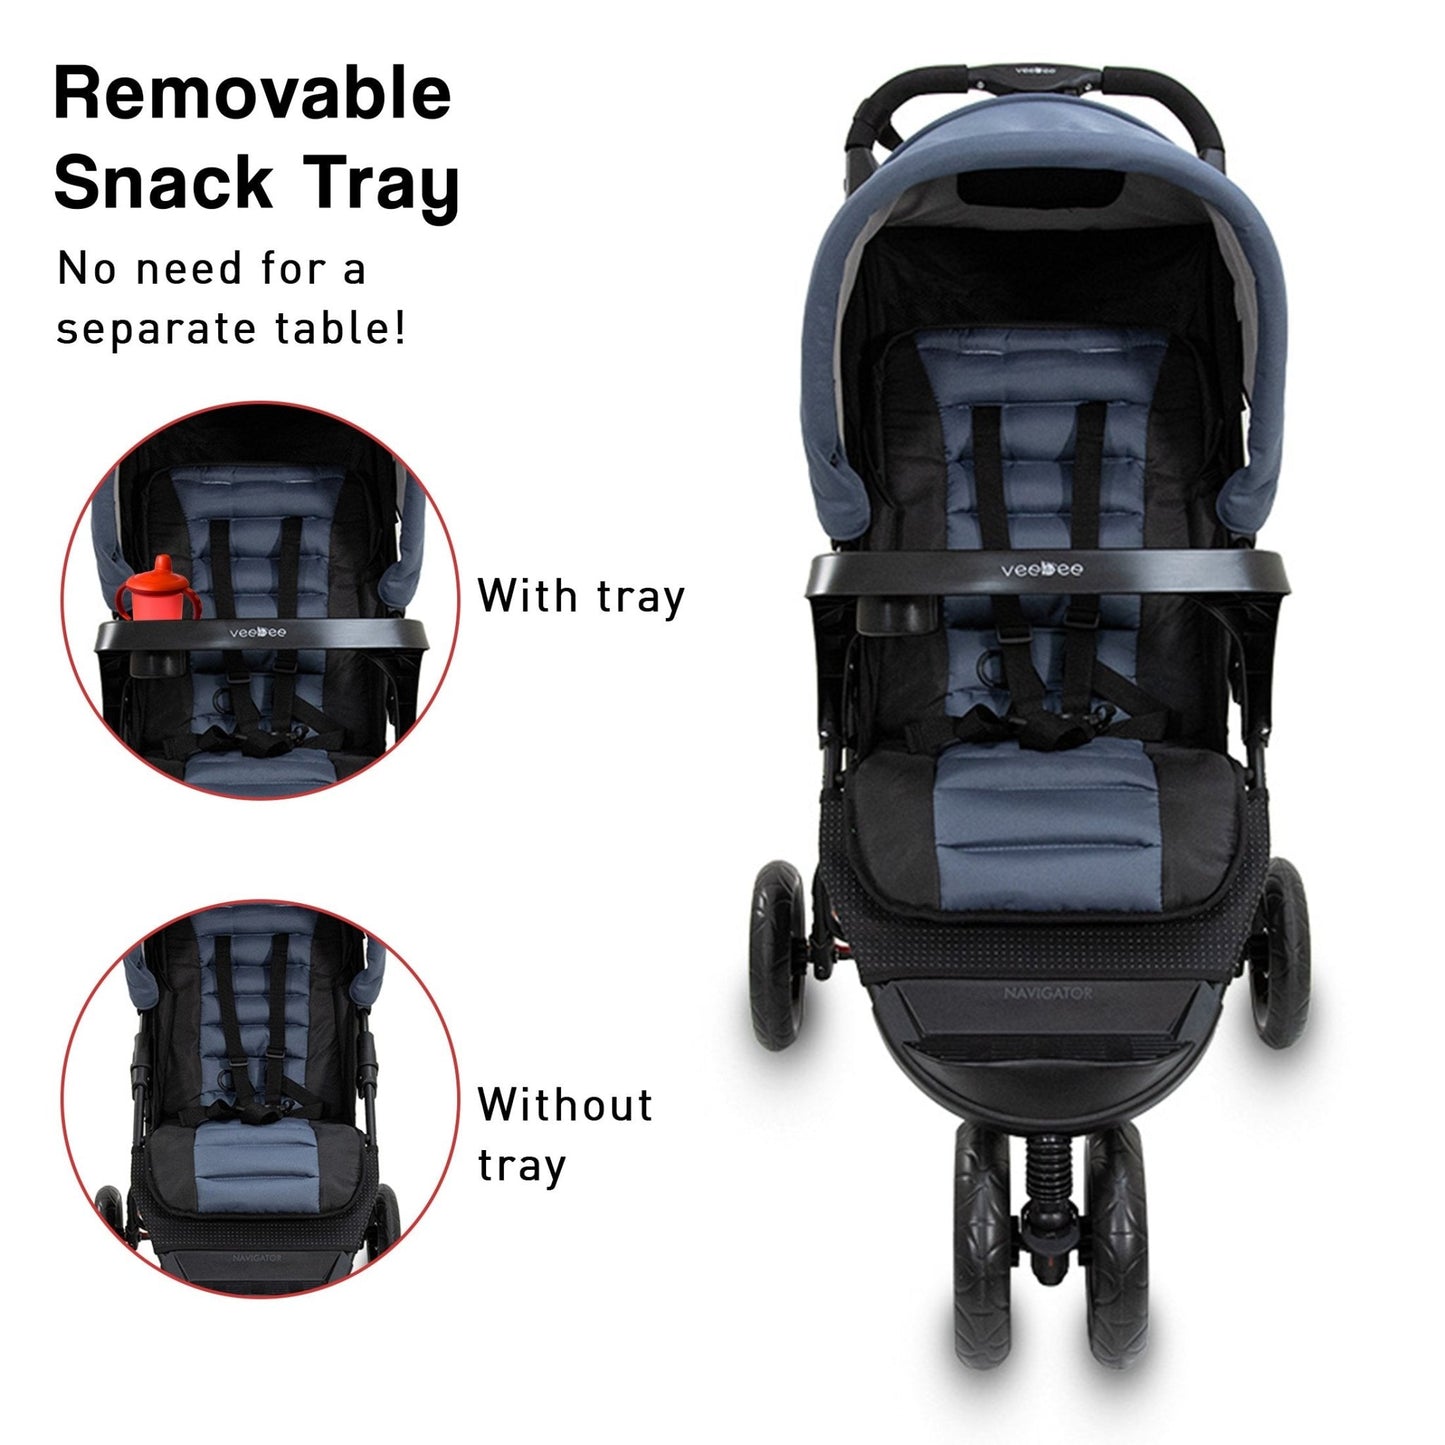 Veebee Navigator Stroller 3-wheel Pram For Newborns To Toddlers - Glacier - Little Kids Business